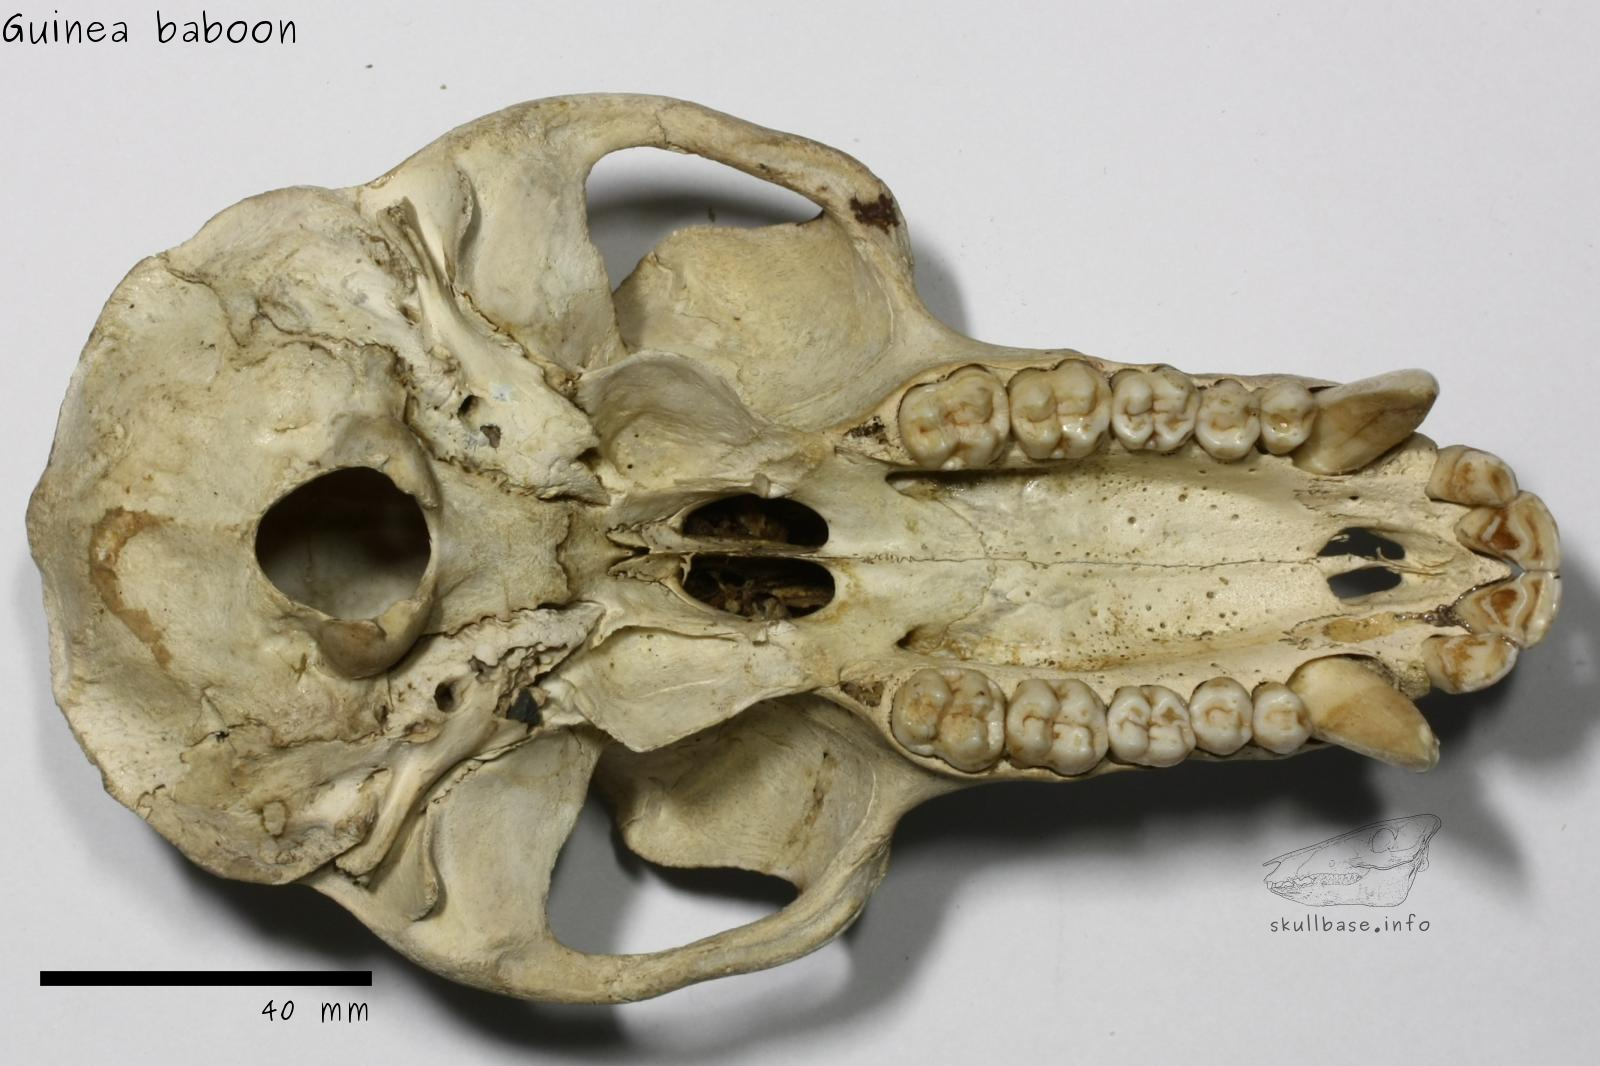 Guinea baboon (Papio papio) skull ventral view